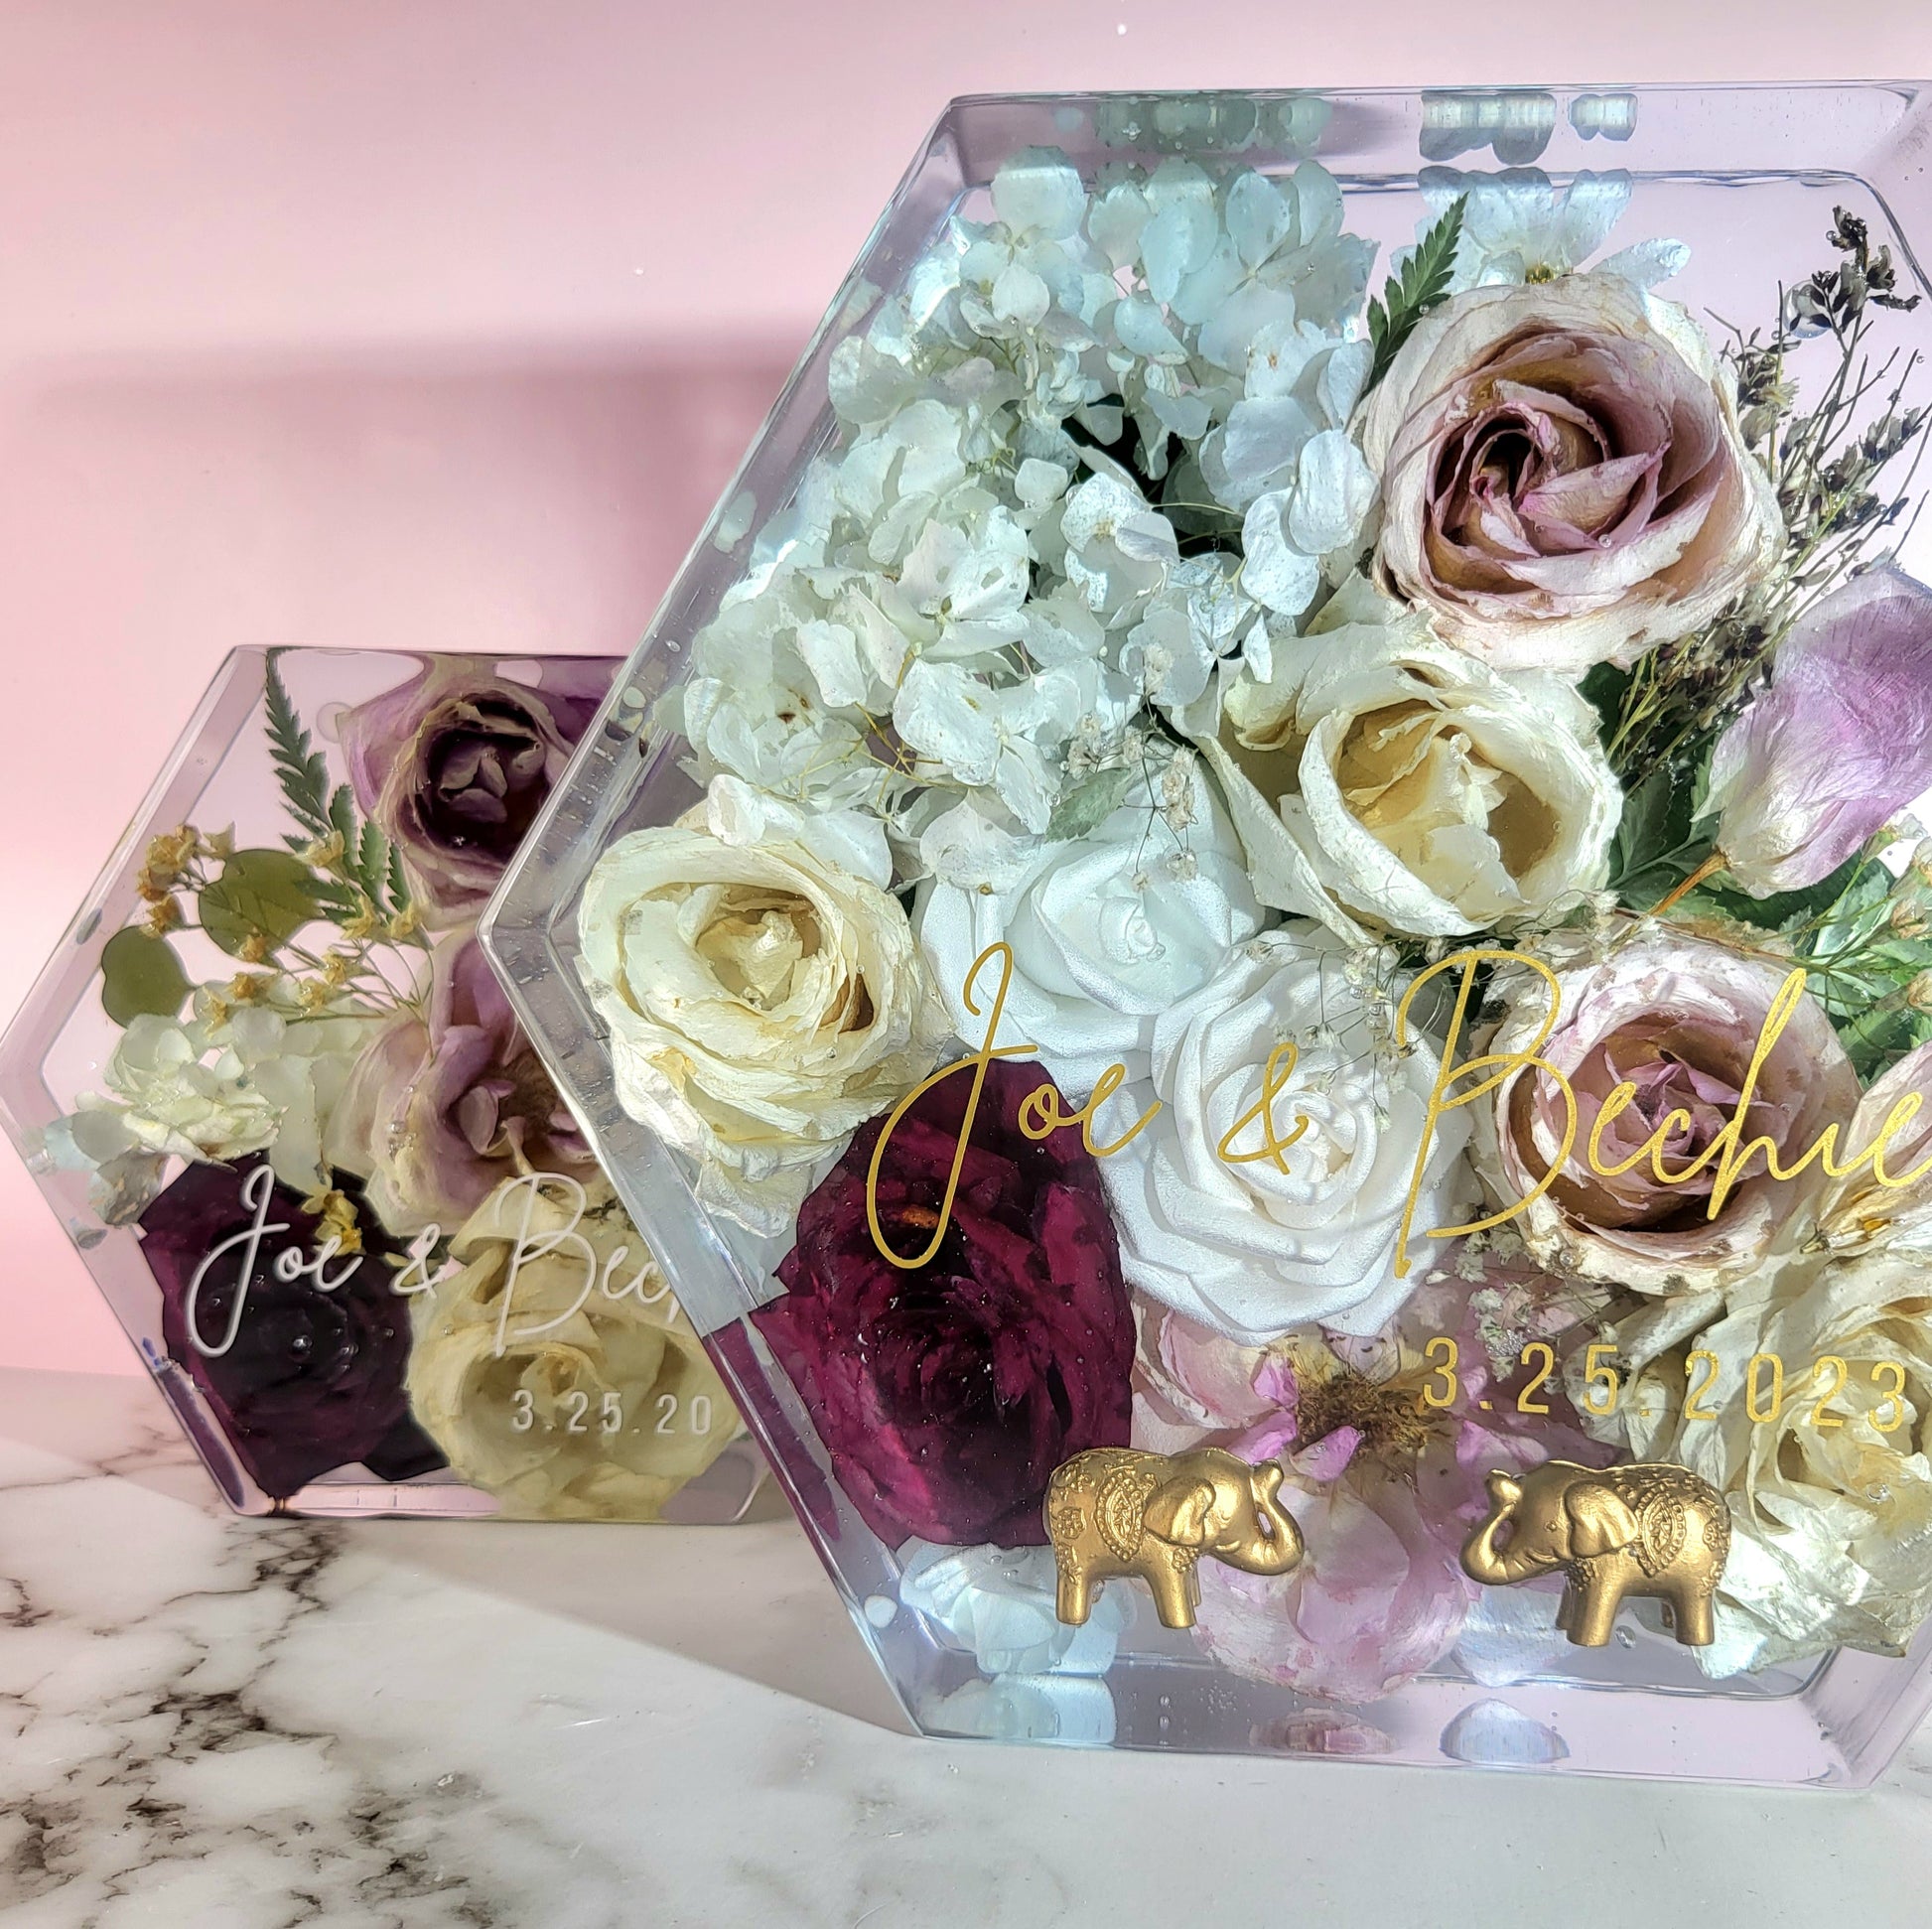 Customized 12" Hexagon 3D Resin Wedding Bouquet Preservation Floral Gift Keepsake Save Your Wedding Flowers Forever - flofloflowery